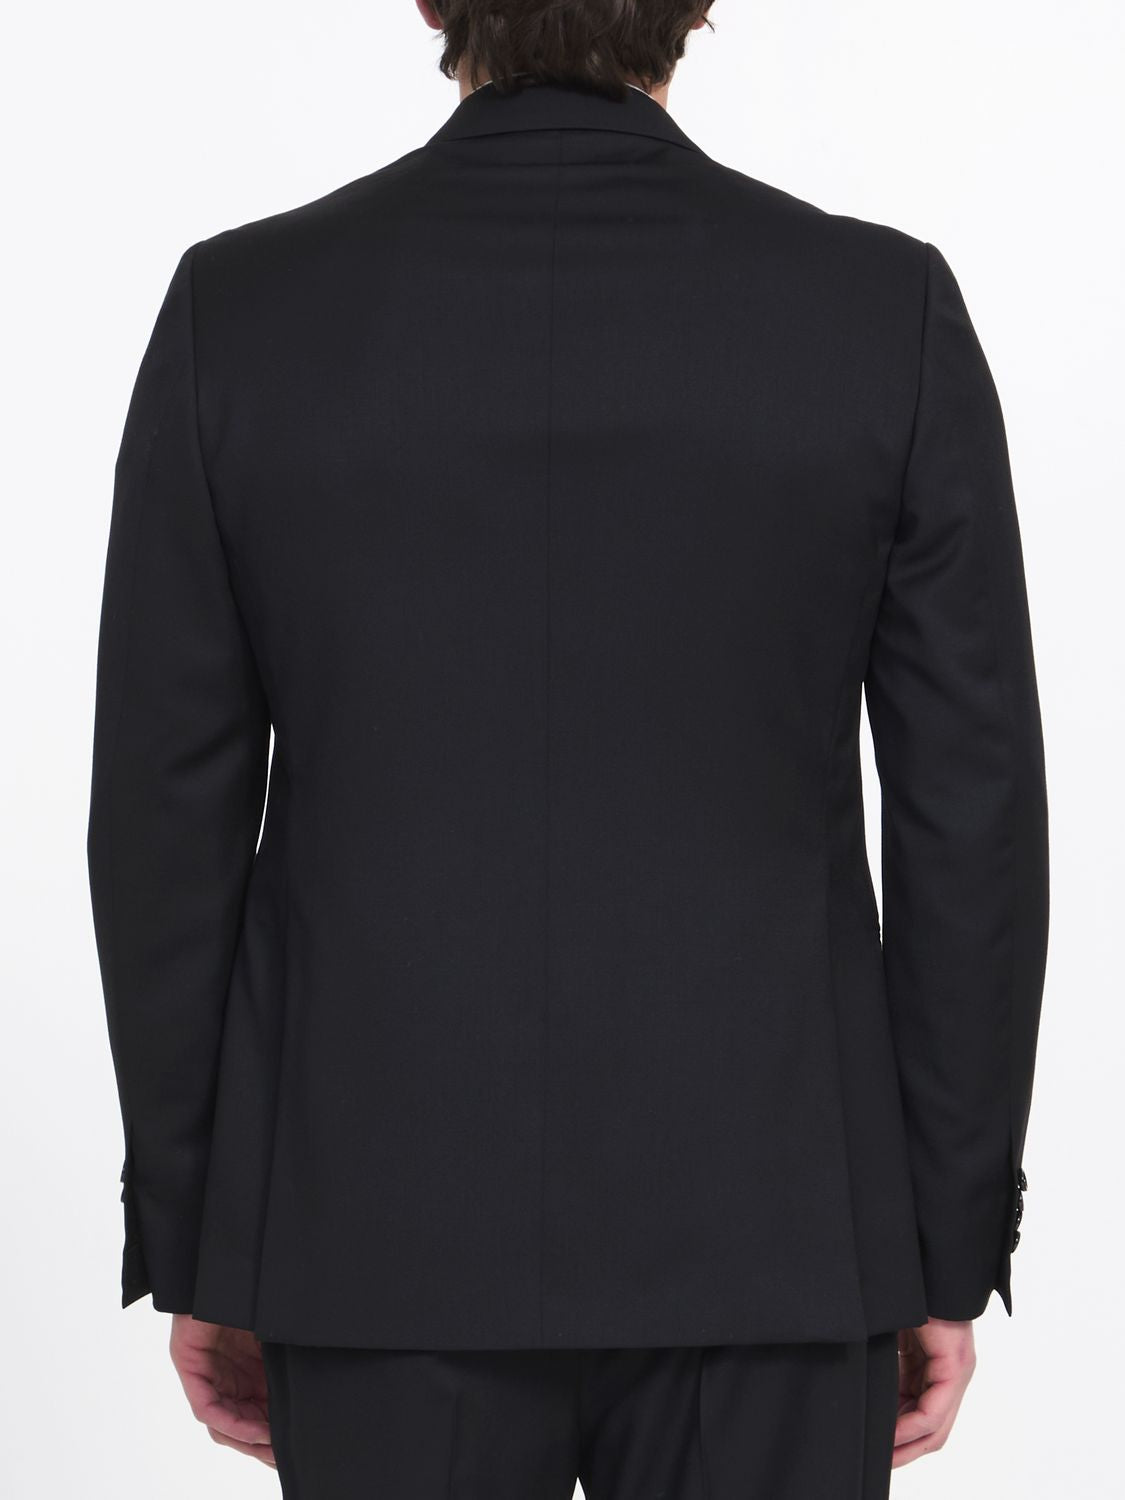 LARDINI Men's Black Two-Piece Suit - Classic Style for the Modern Gentleman